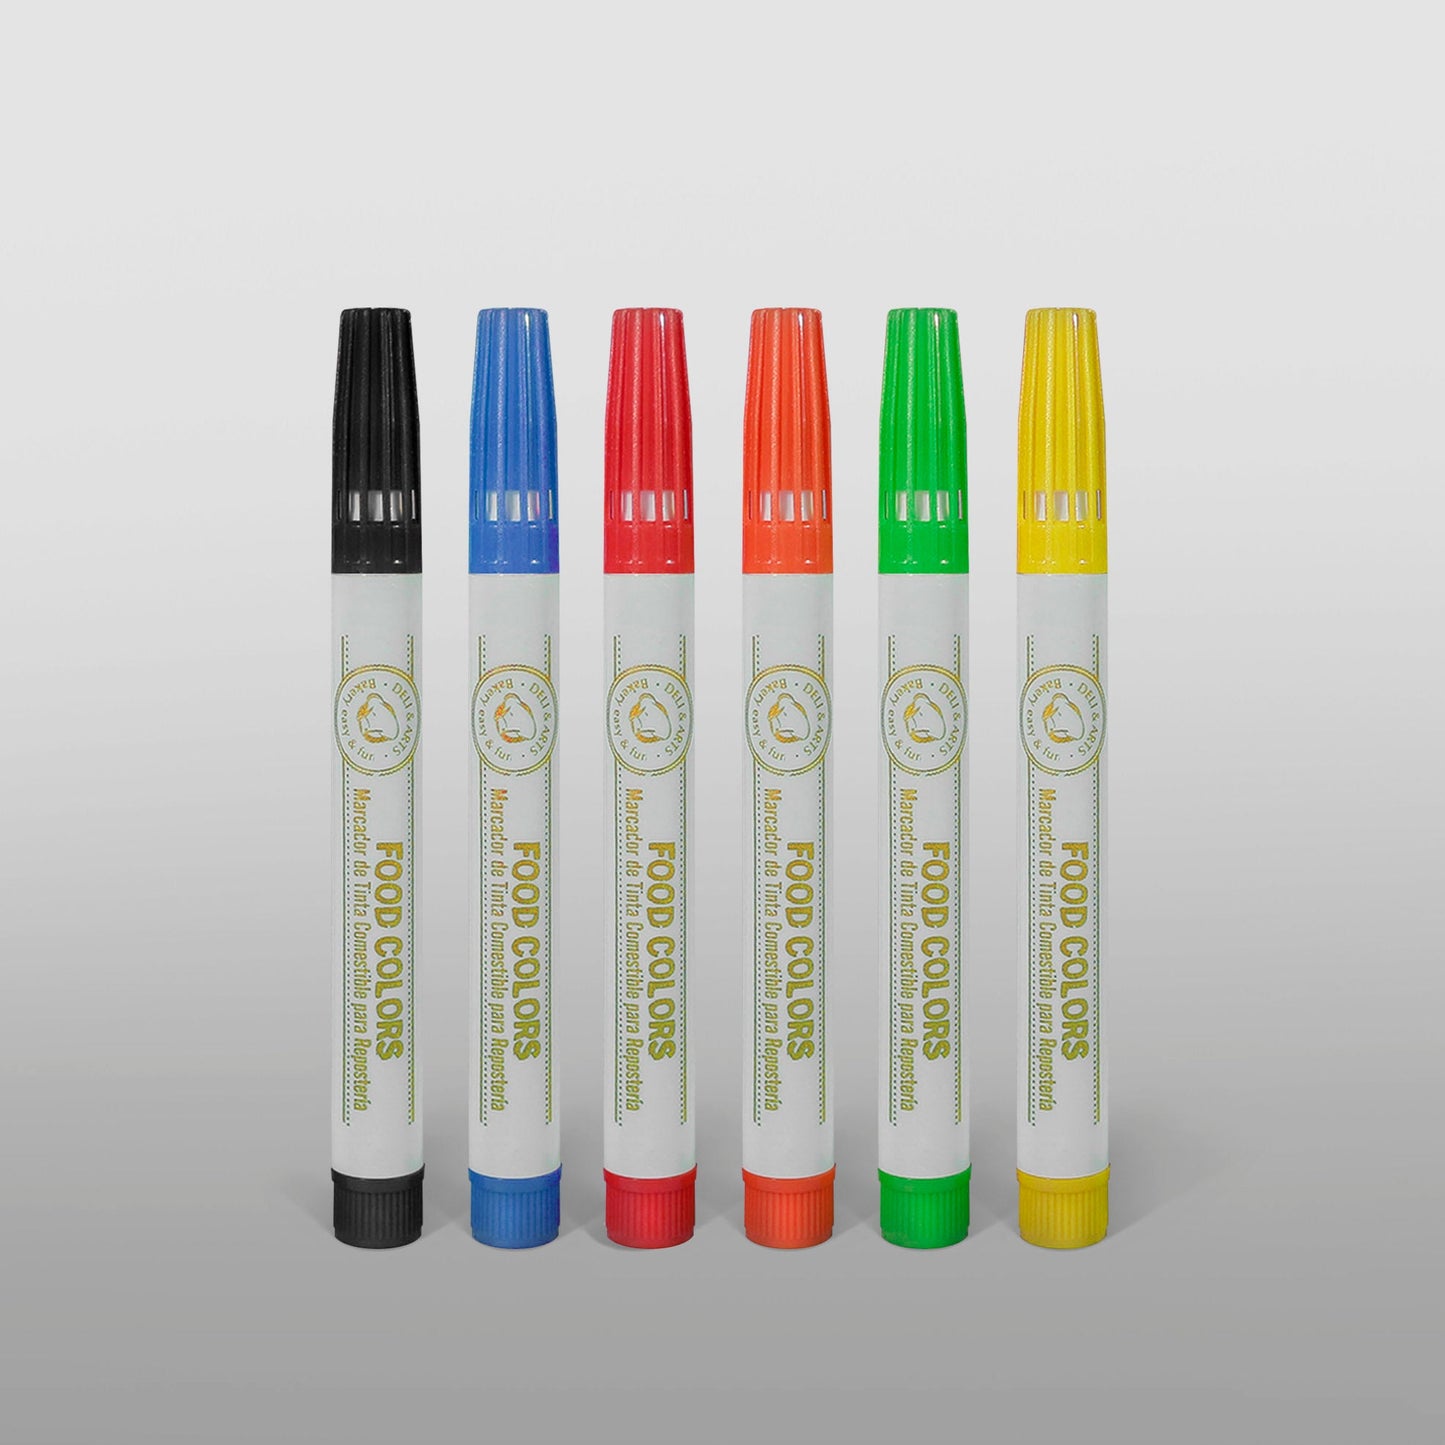 Edible Ink Marker - Food Colors Classic Set 1